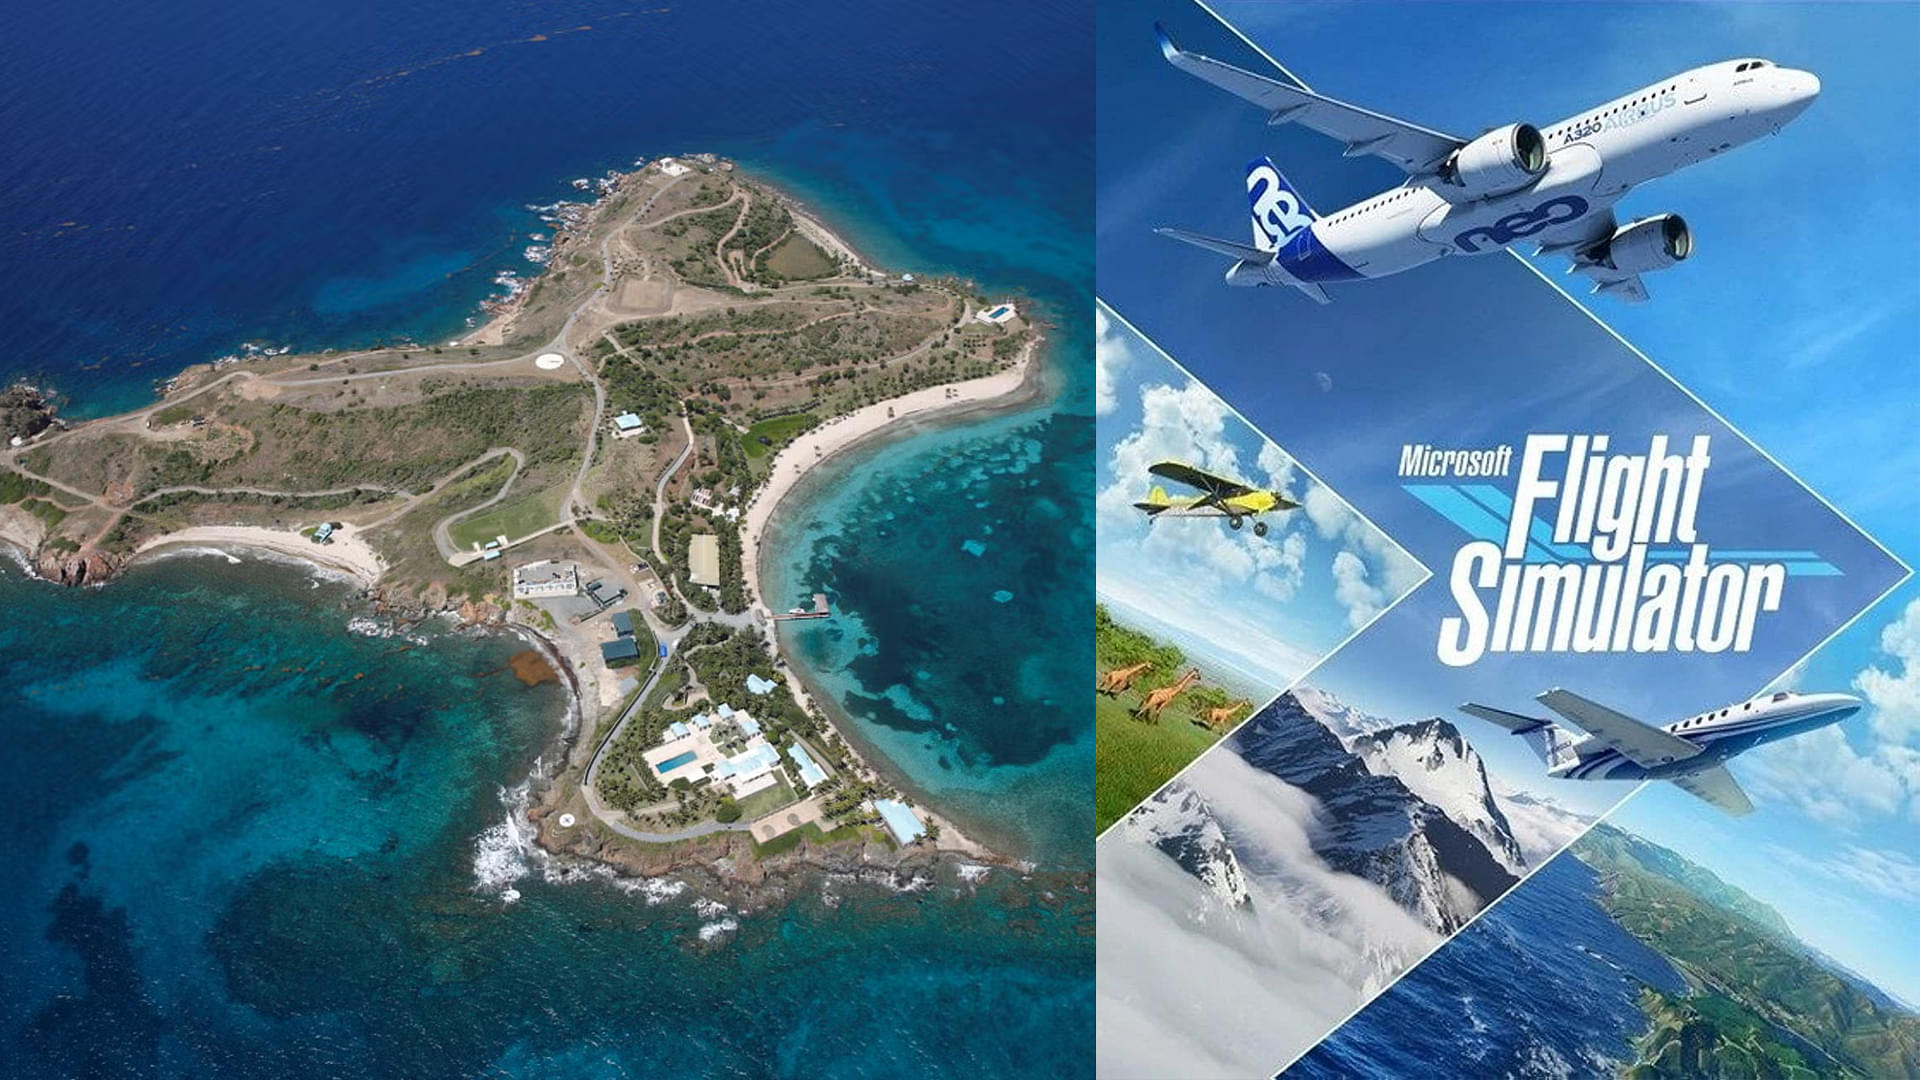 An image showing Jeffrey Epstein Island and Microsoft Flight Simulator cover